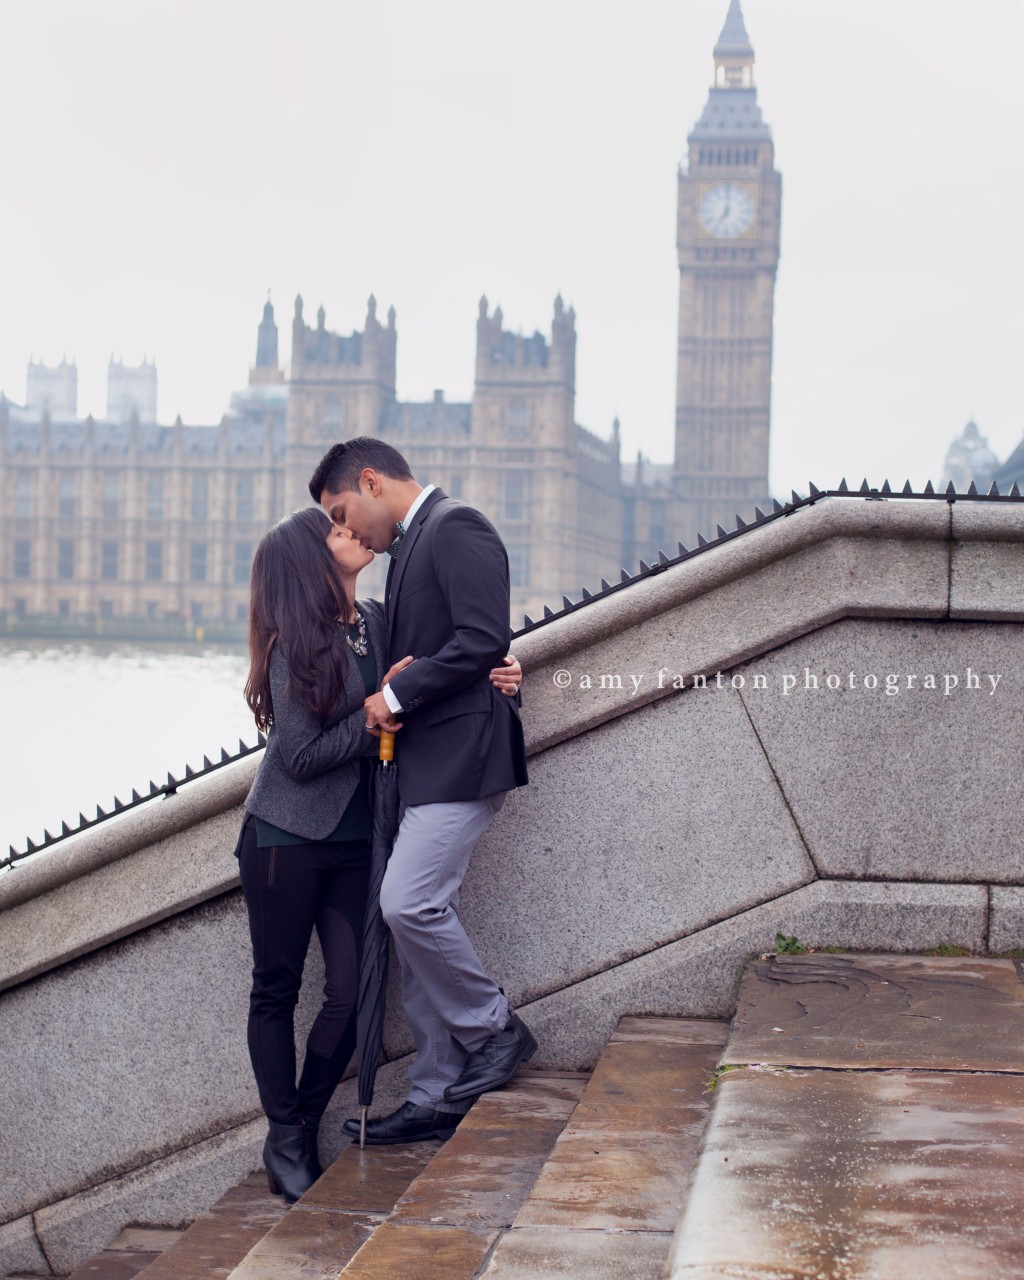 Romantic London photo shoot